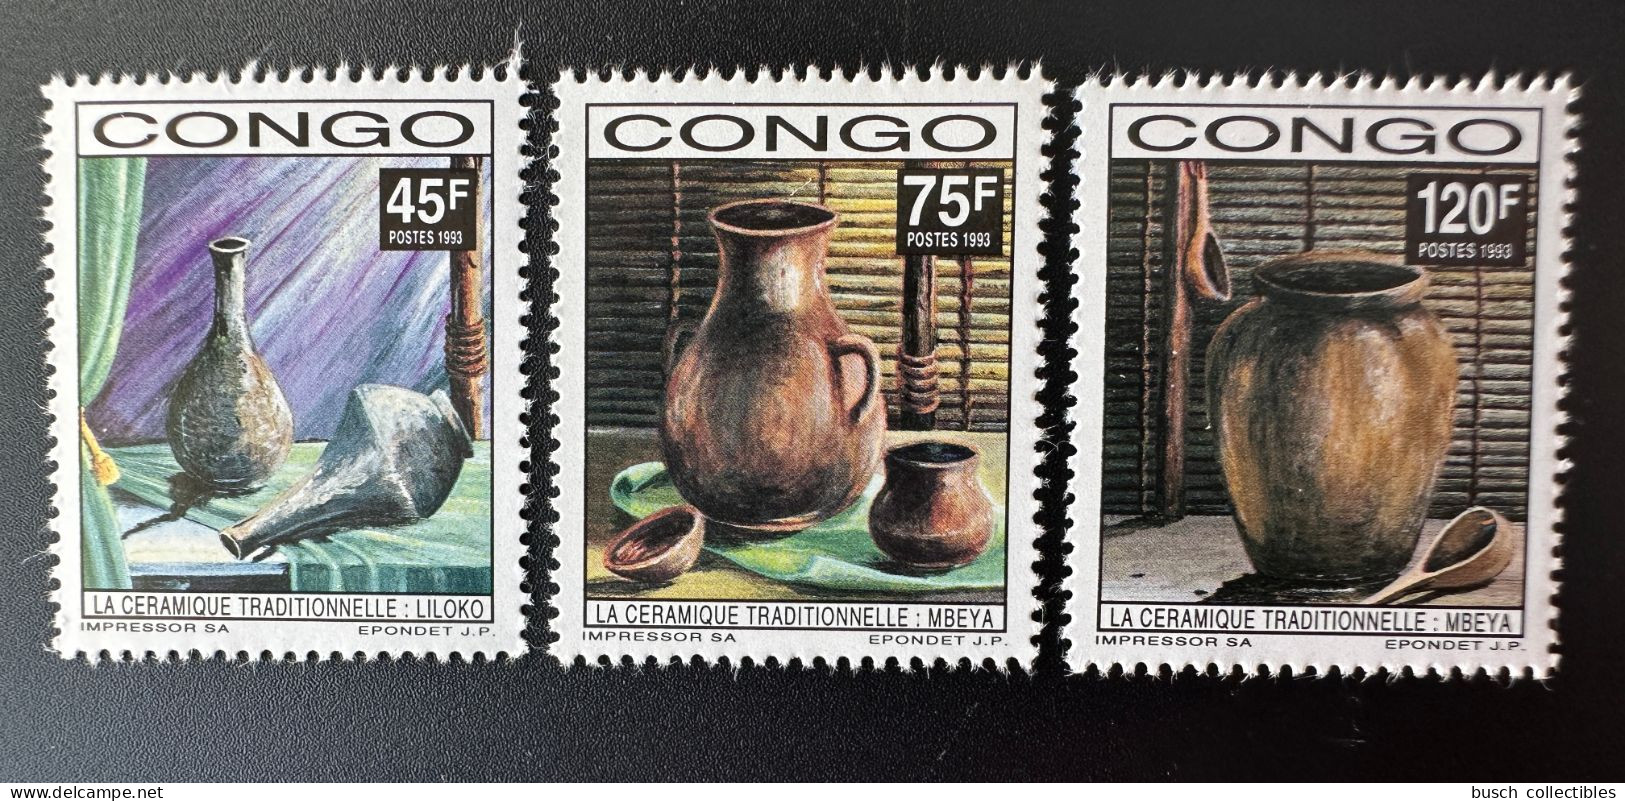 Congo Kongo 1992 / 1993 Mi. 1351 - 1353 Céramique Tradtionnelle Keramik Ceramic - Mint/hinged